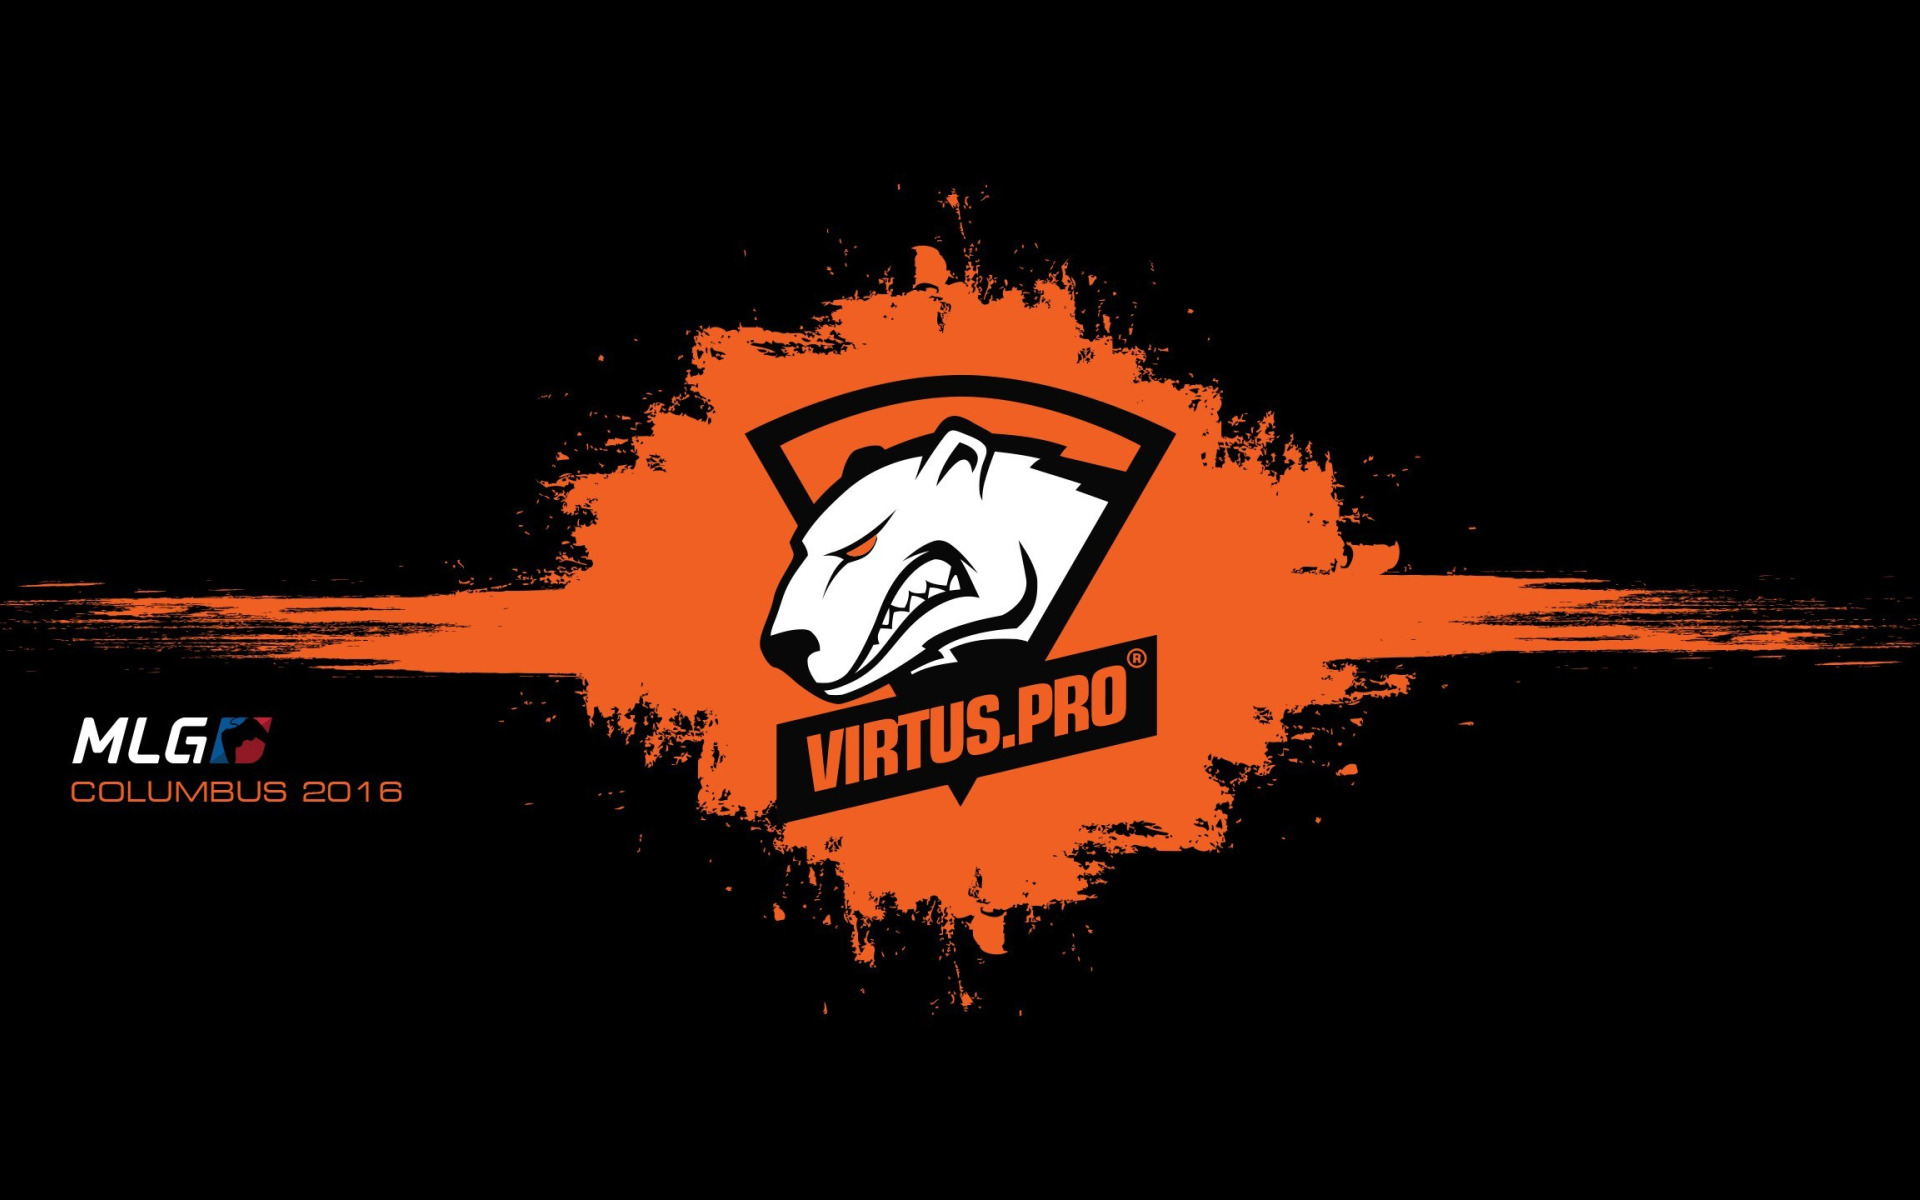 Virus pro. КС го Virtus Pro. Virtus Pro CS go logo. Vartu Pro. Virtus Pro обои на рабочий стол.